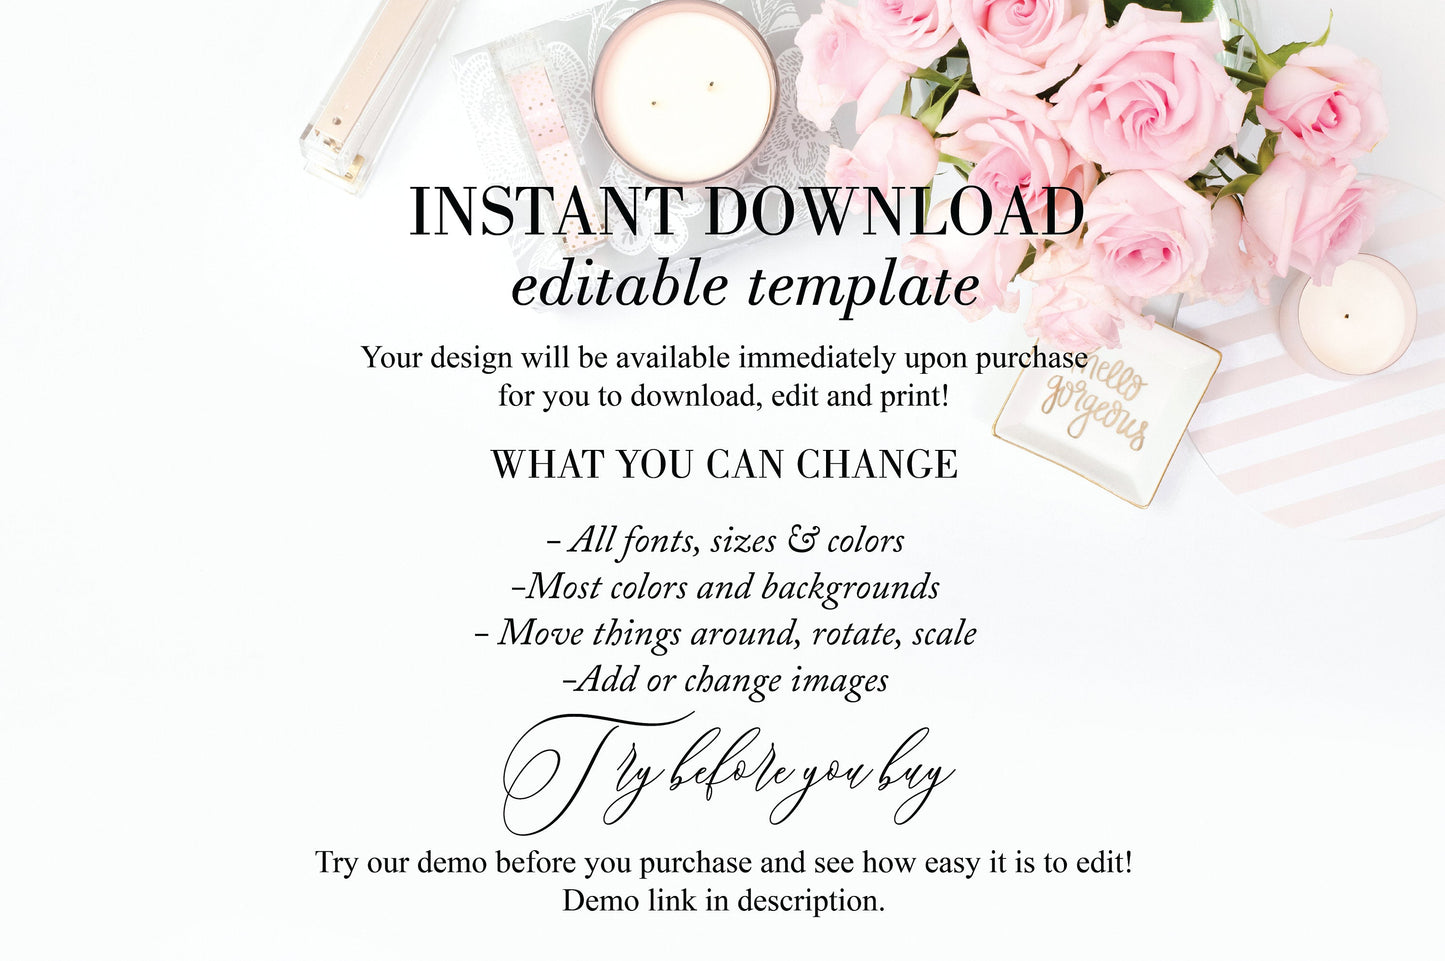 Wedding Invitation Editable Template, Printable DIY Instant Download Invites, Digital Download Invitations Calligraphy -Olivia WEDDING INVITATIONS SAVVY PAPER CO